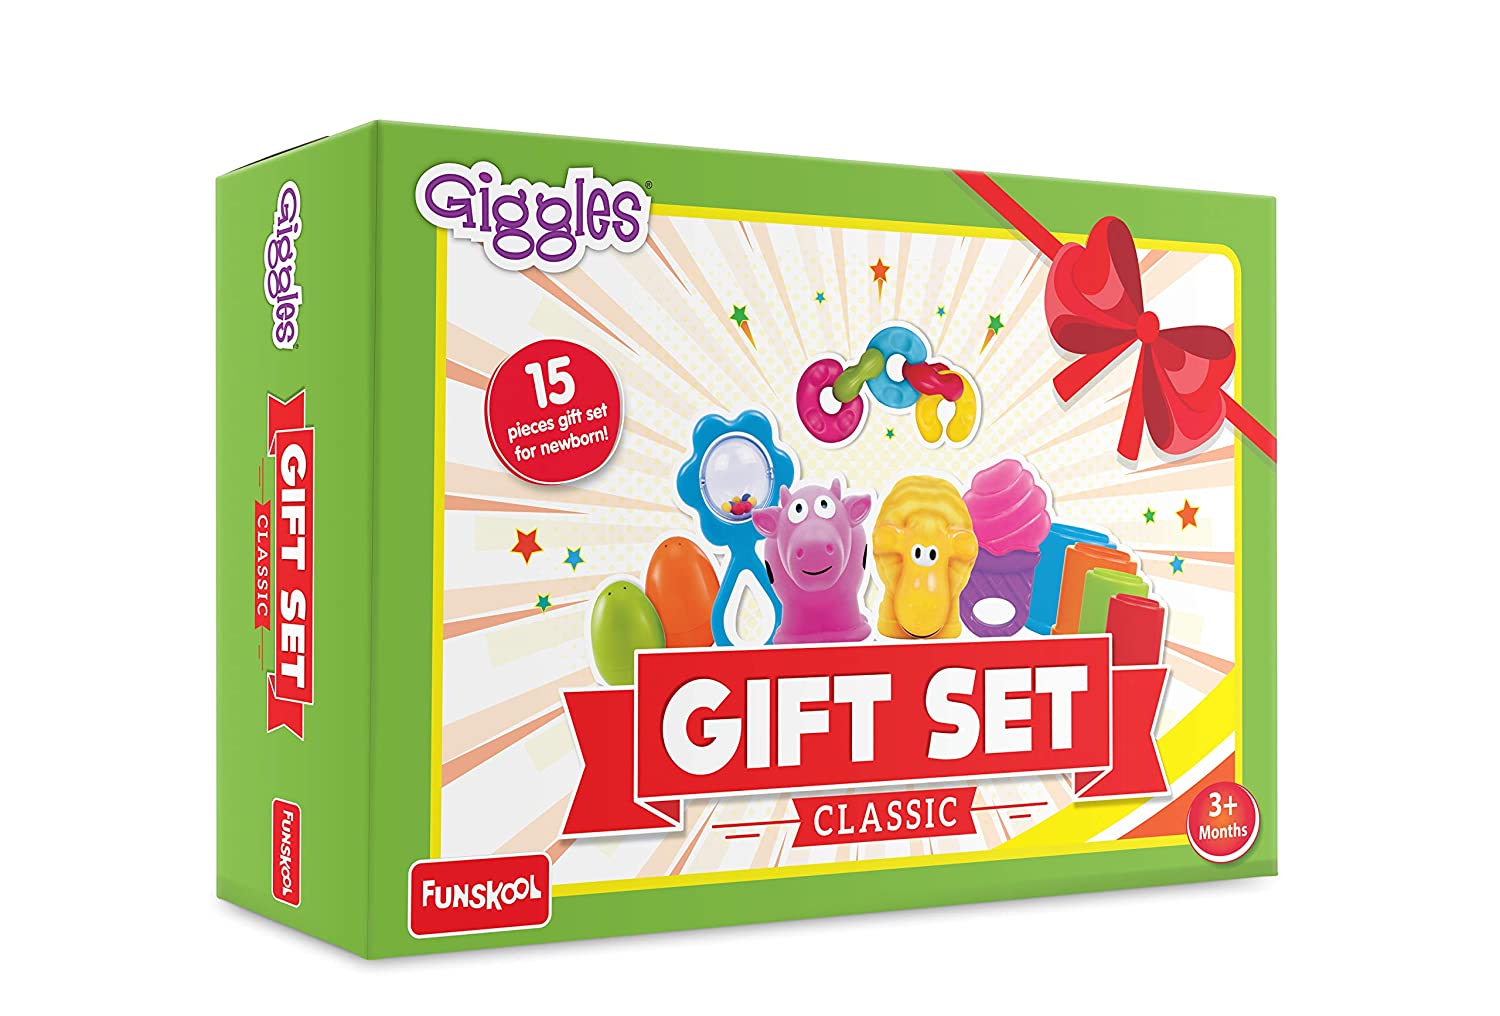 Funskool New Gift Set Classic (Pack of 1)